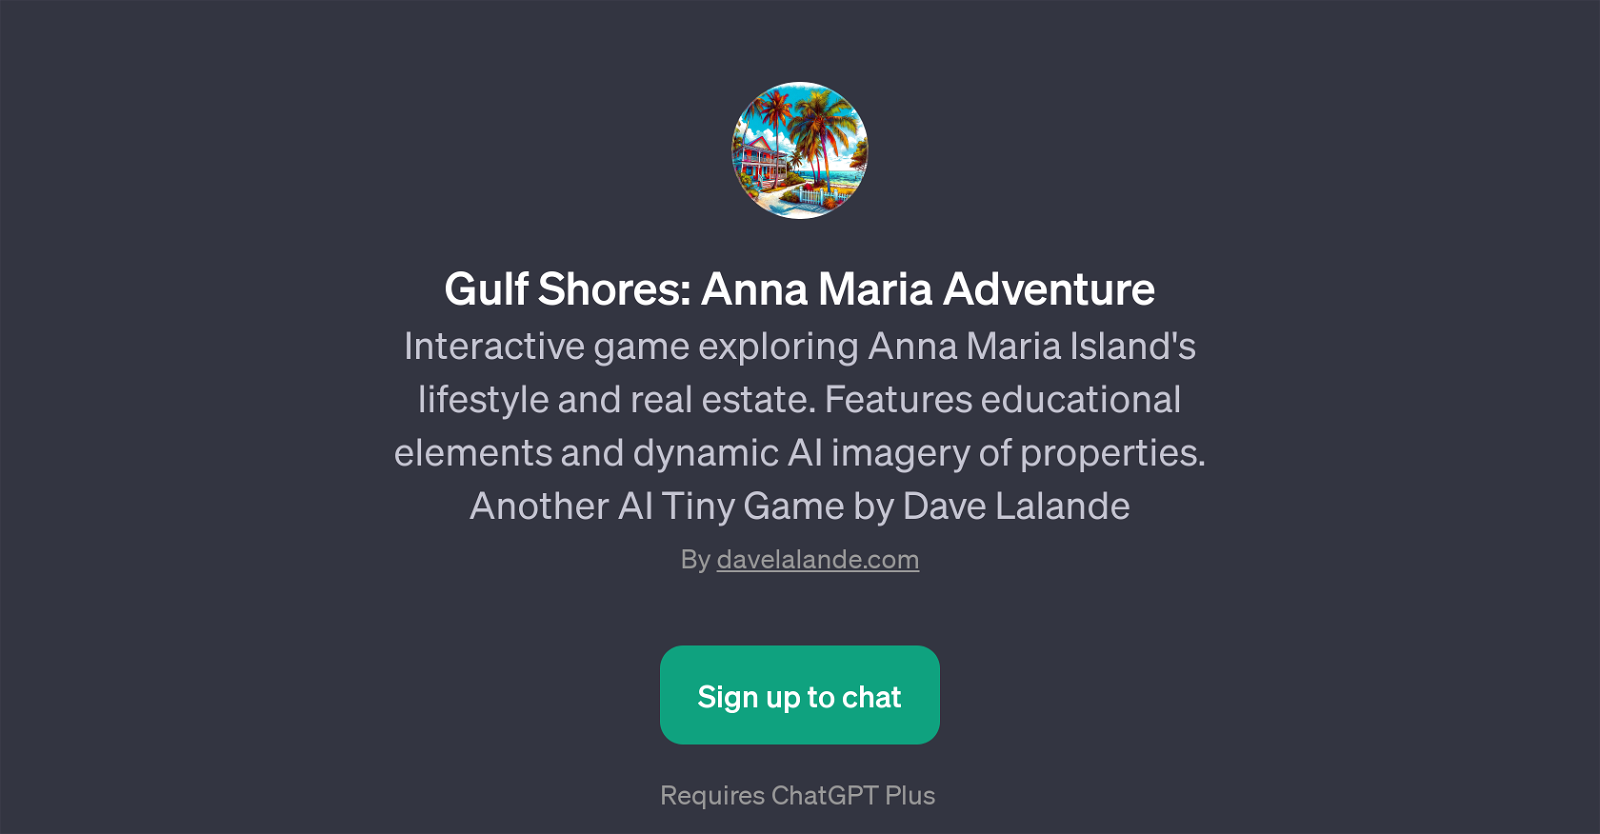 Gulf Shores: Anna Maria Adventure website